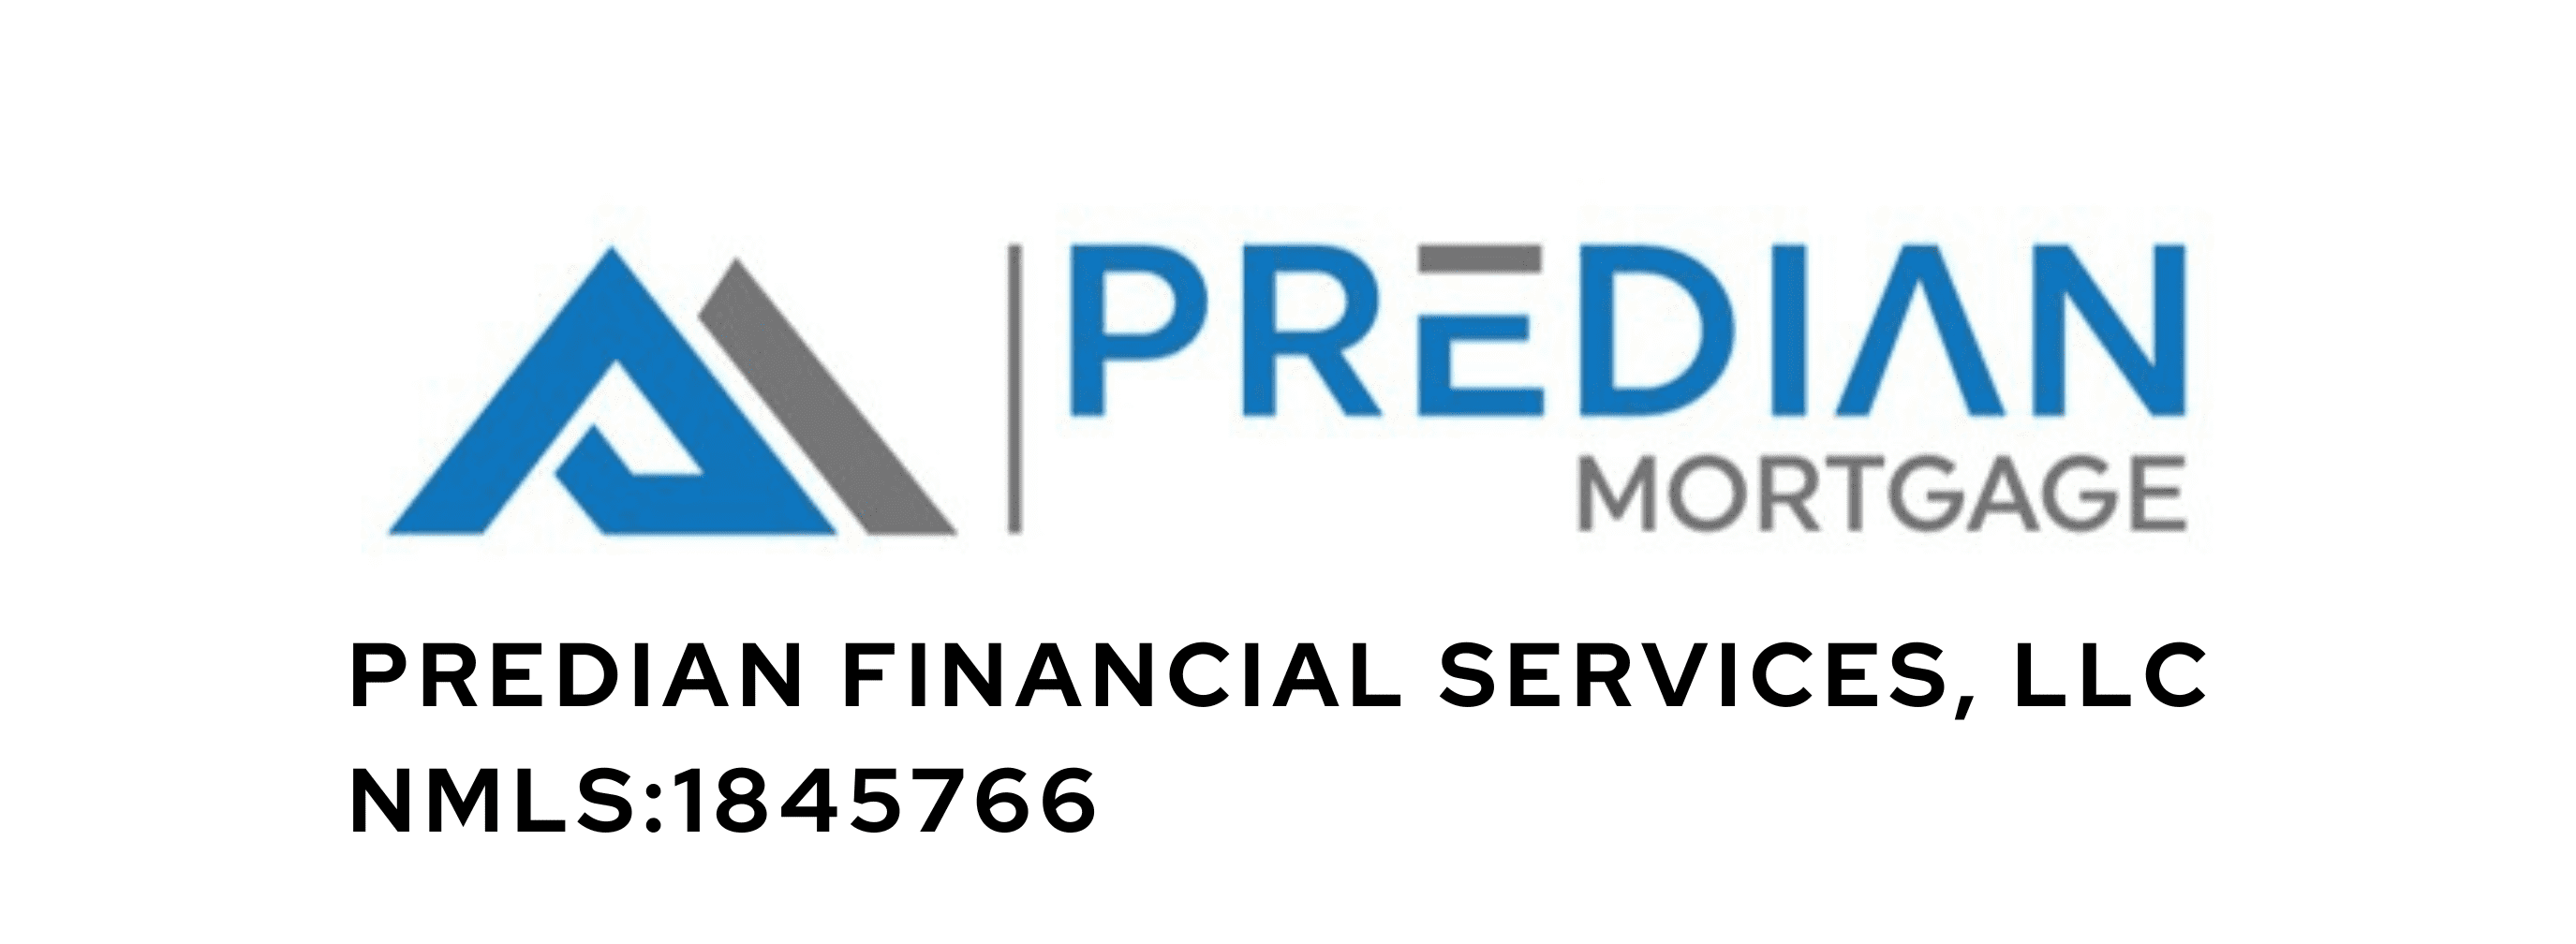 Predian Financial Services, LLC dba PREDIAN Mortgage (NMLS: 1845766)